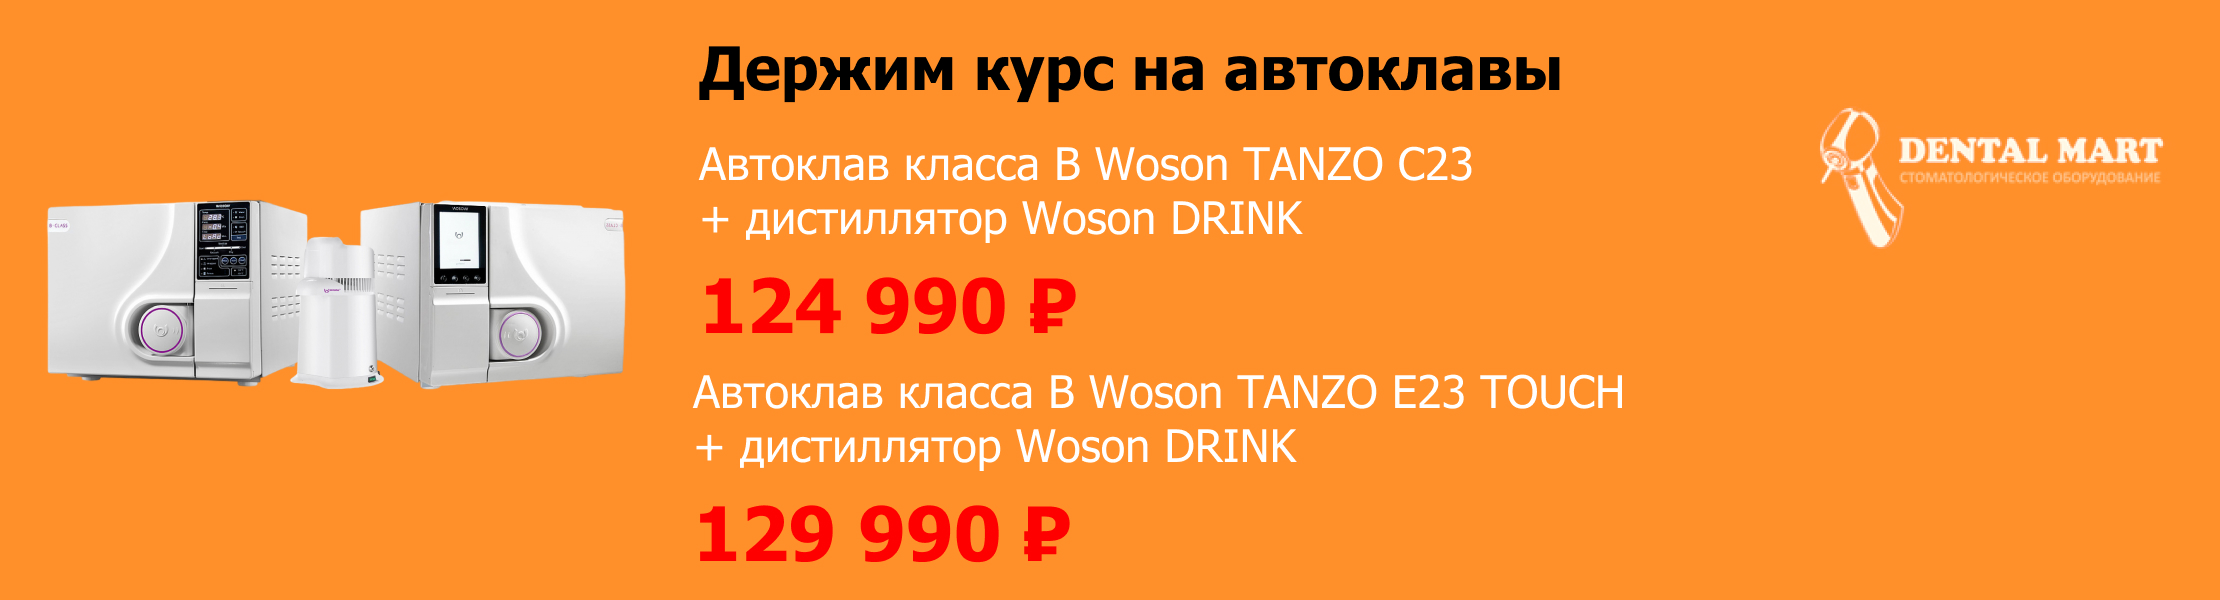 Woson TANZO C23 автоклав класса В + Woson DRINK дистиллятор